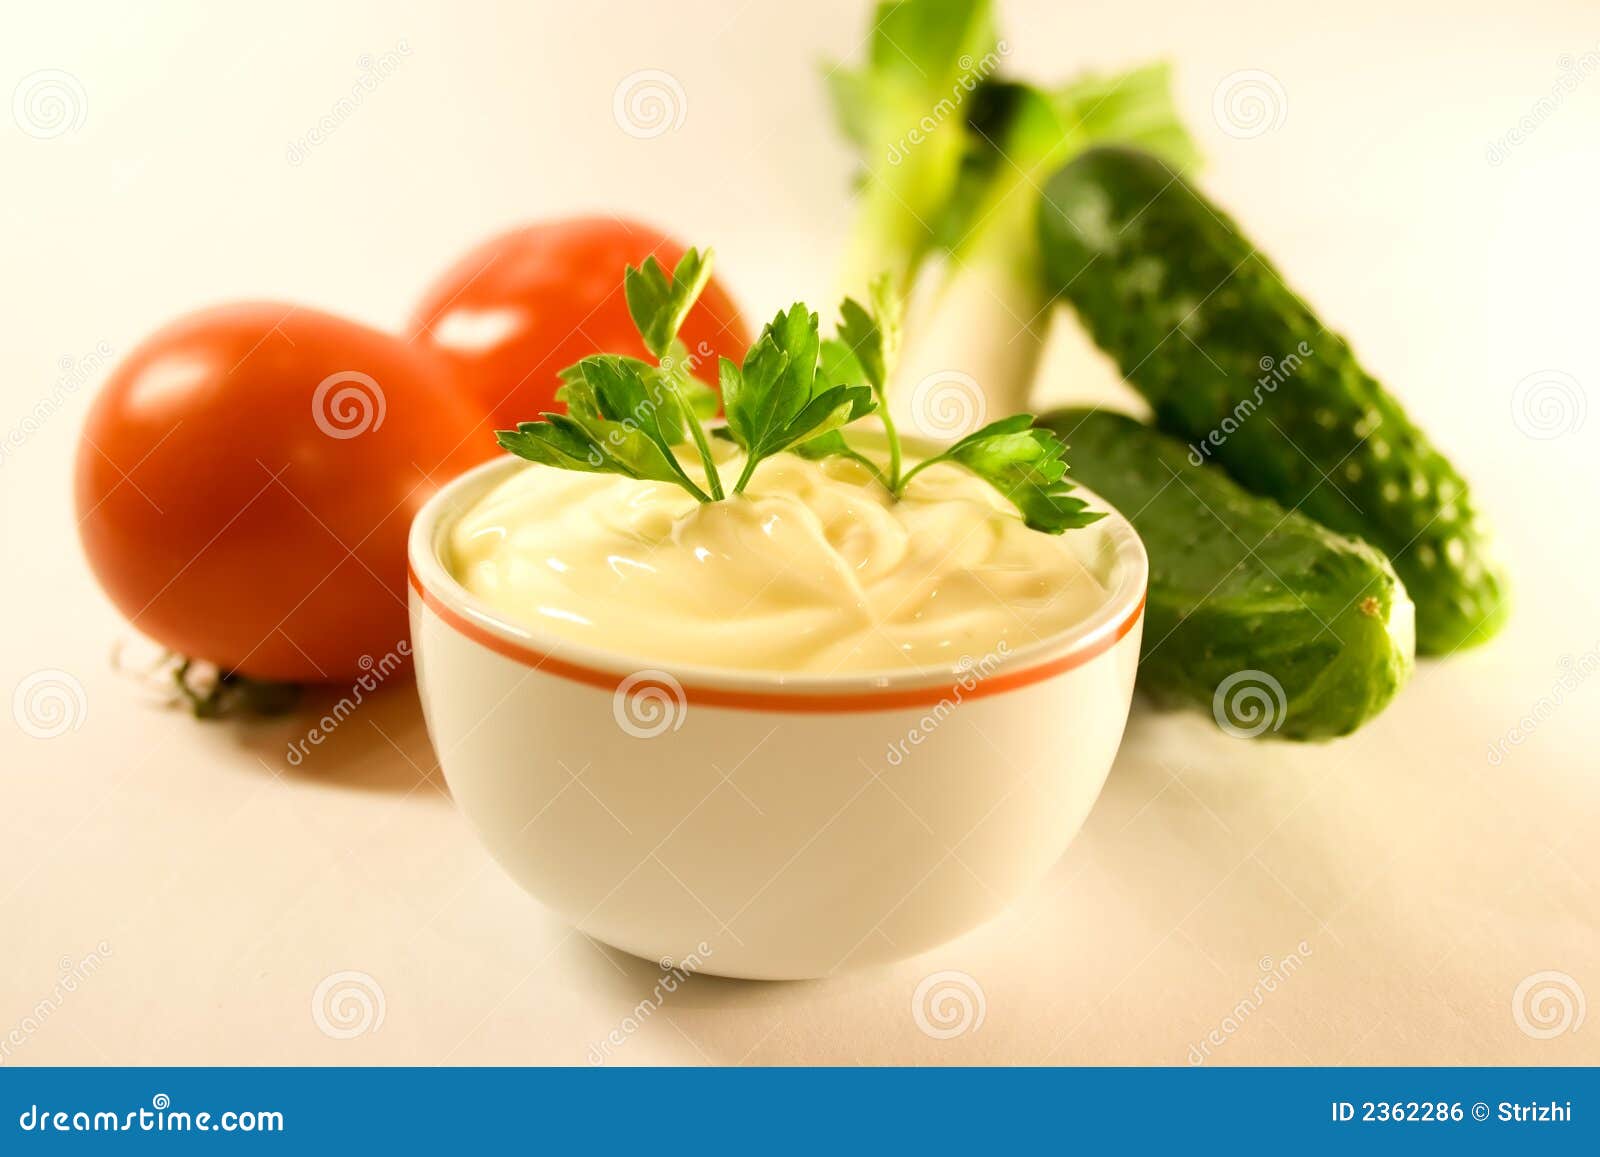 Mayonnaise and Fresh Vegetable Stock Photo - Image of seasoning, garlic ...